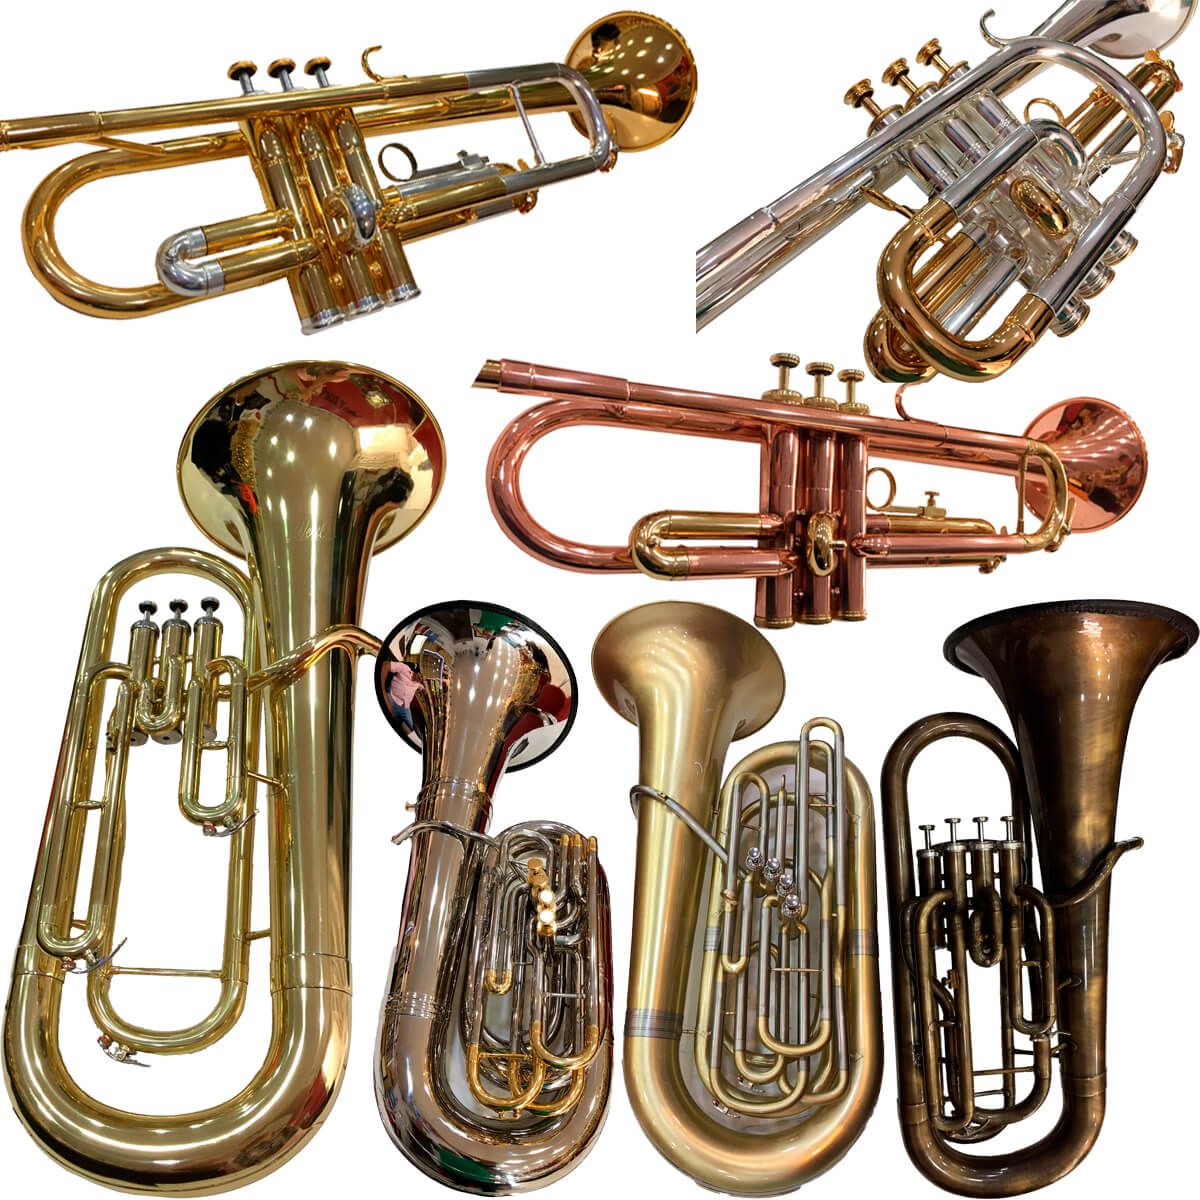 Reforma Geral De Trompete, Tuba, Bombardão, Trombone, Bombardino, Trompa, Flugelhorn E Cornet